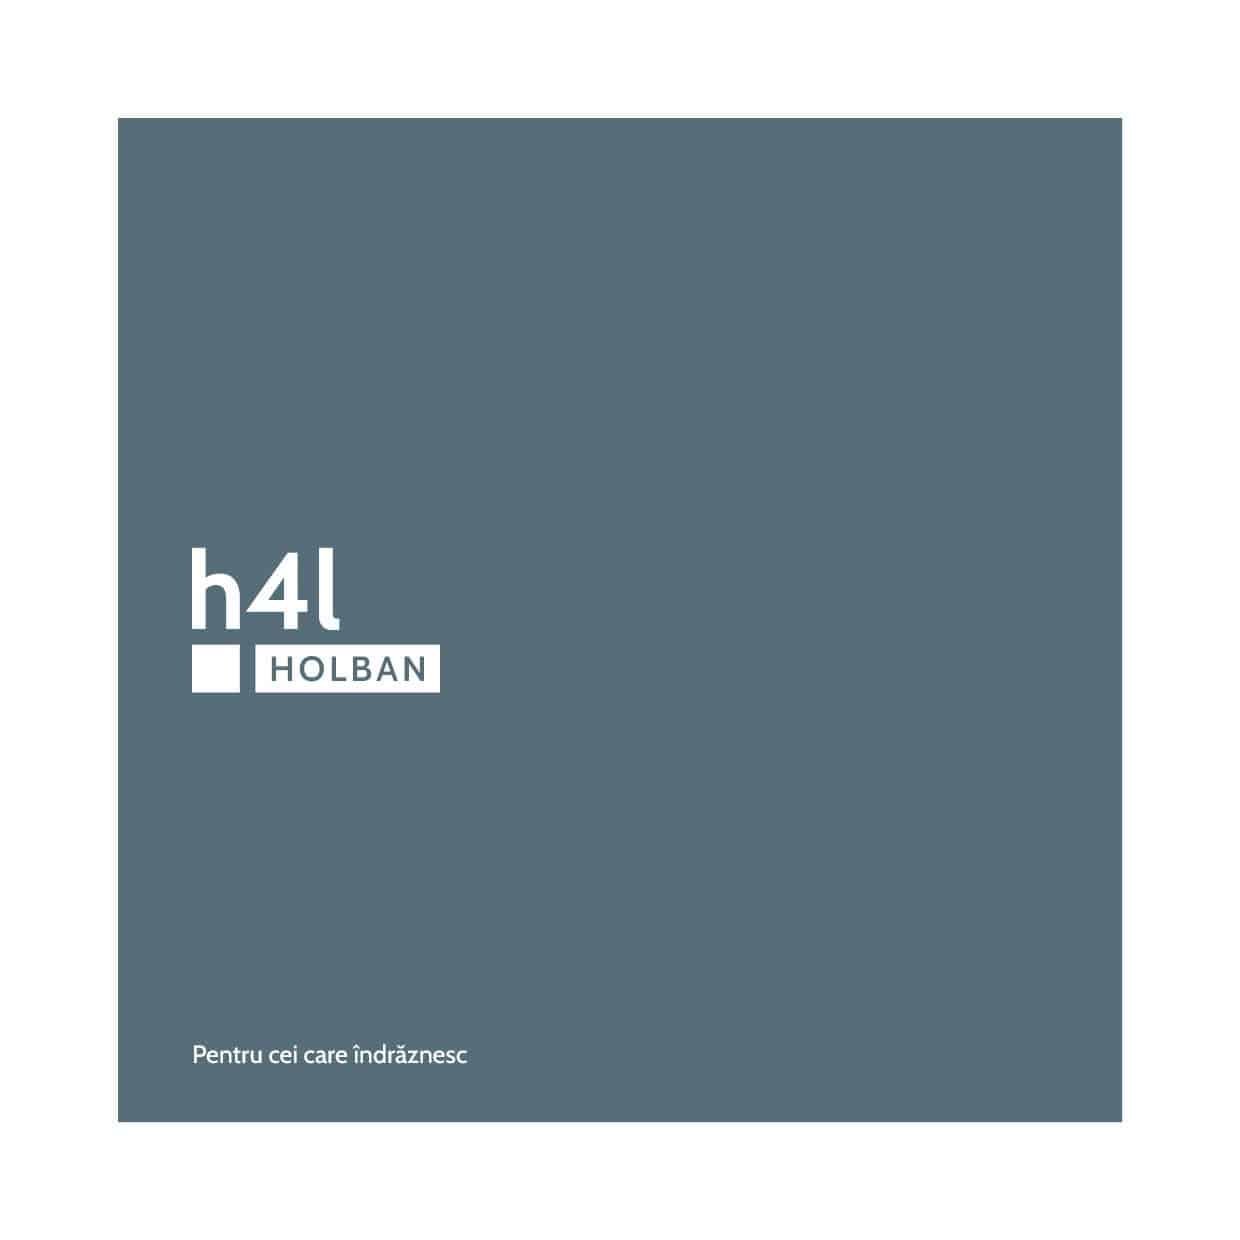 h4l, h4l HOLBAN, home 4 life, branding, design